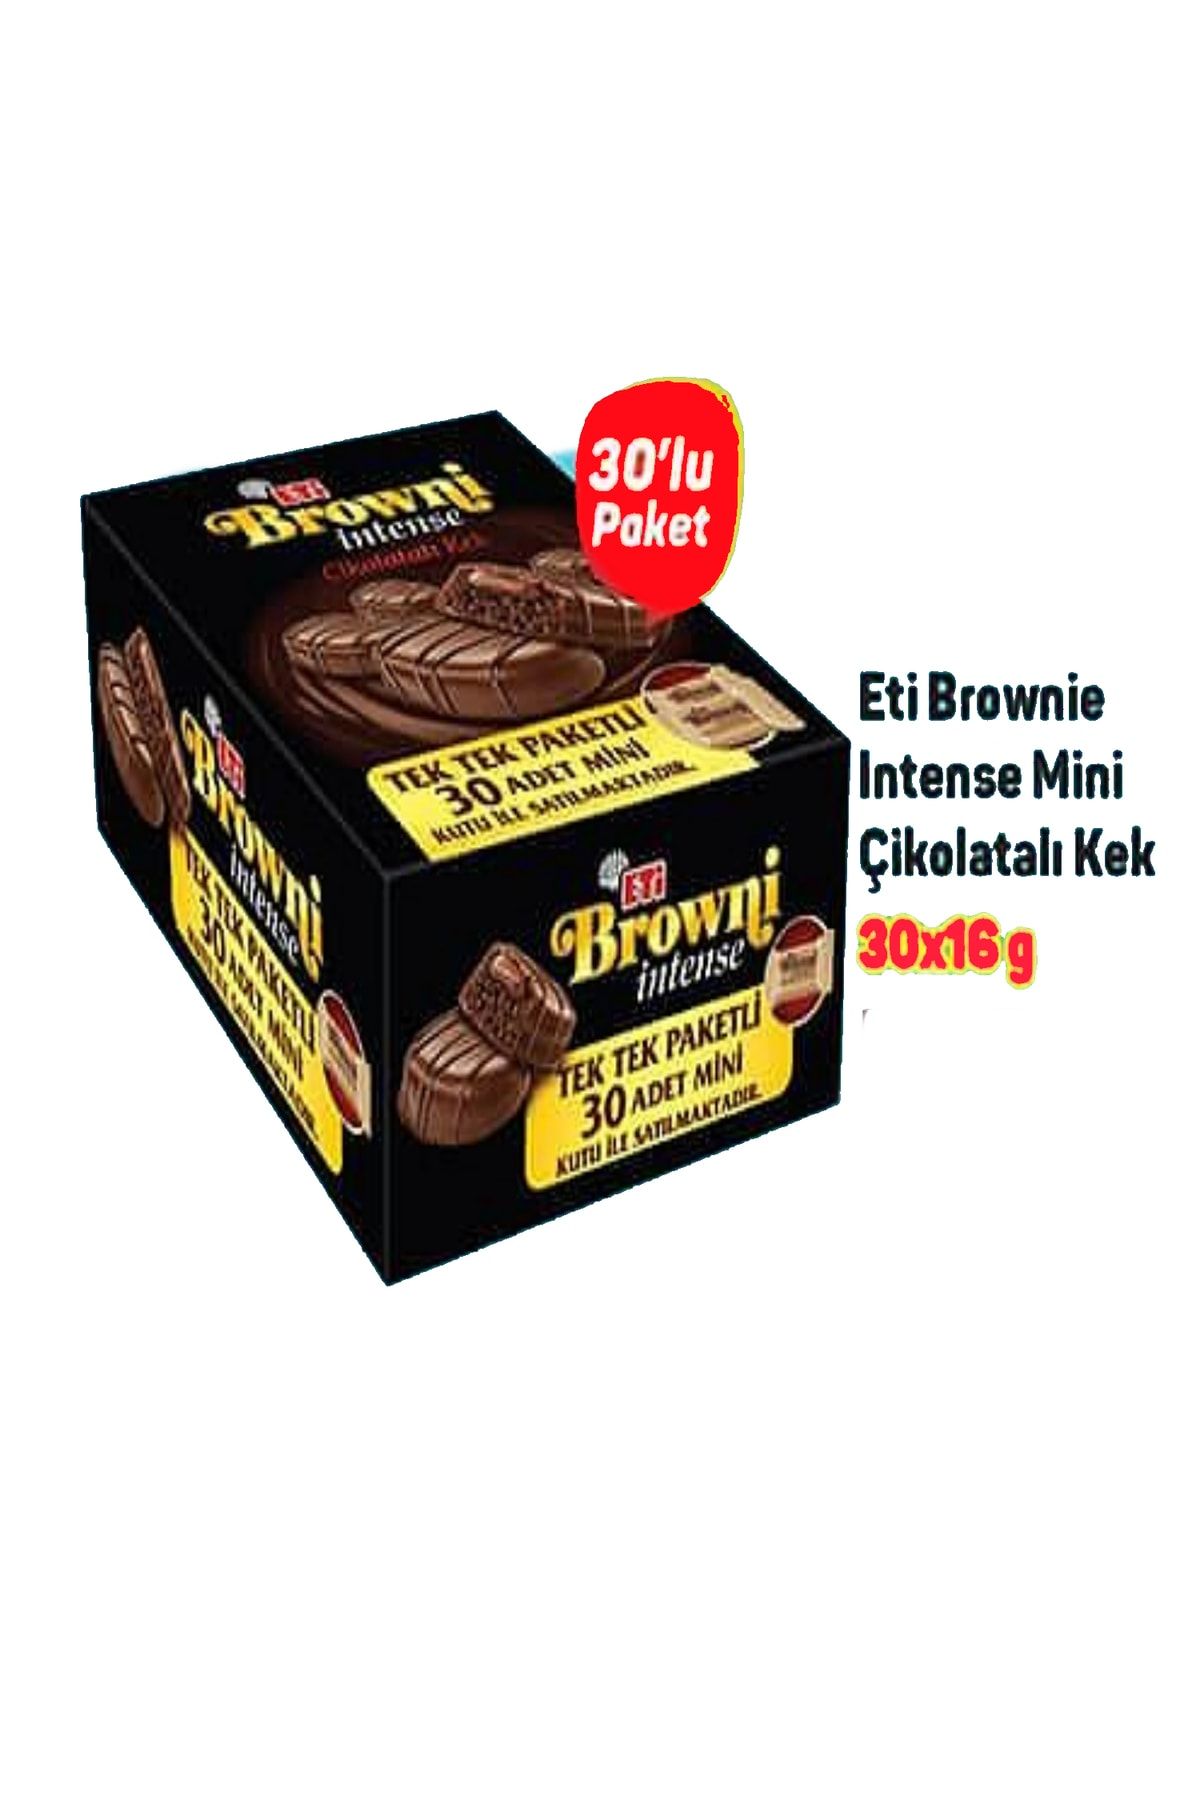 Eti Browni Intense Mini Çikolatalı Tek Tek Paketli 27 Adet 16 Gr. Çikolata